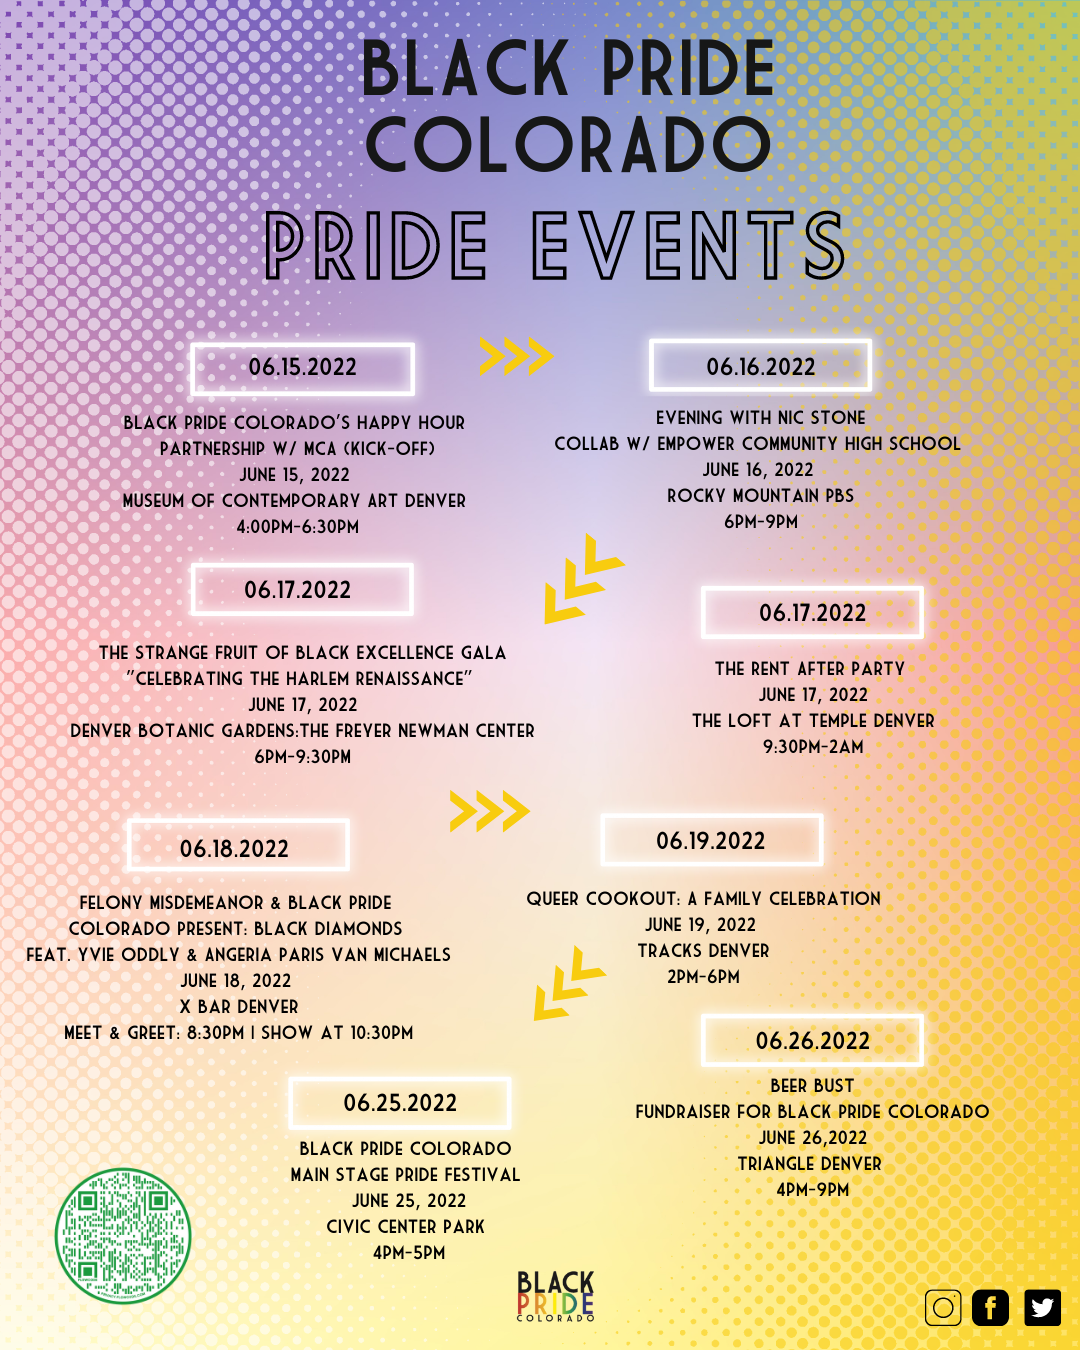 events for Black Pride